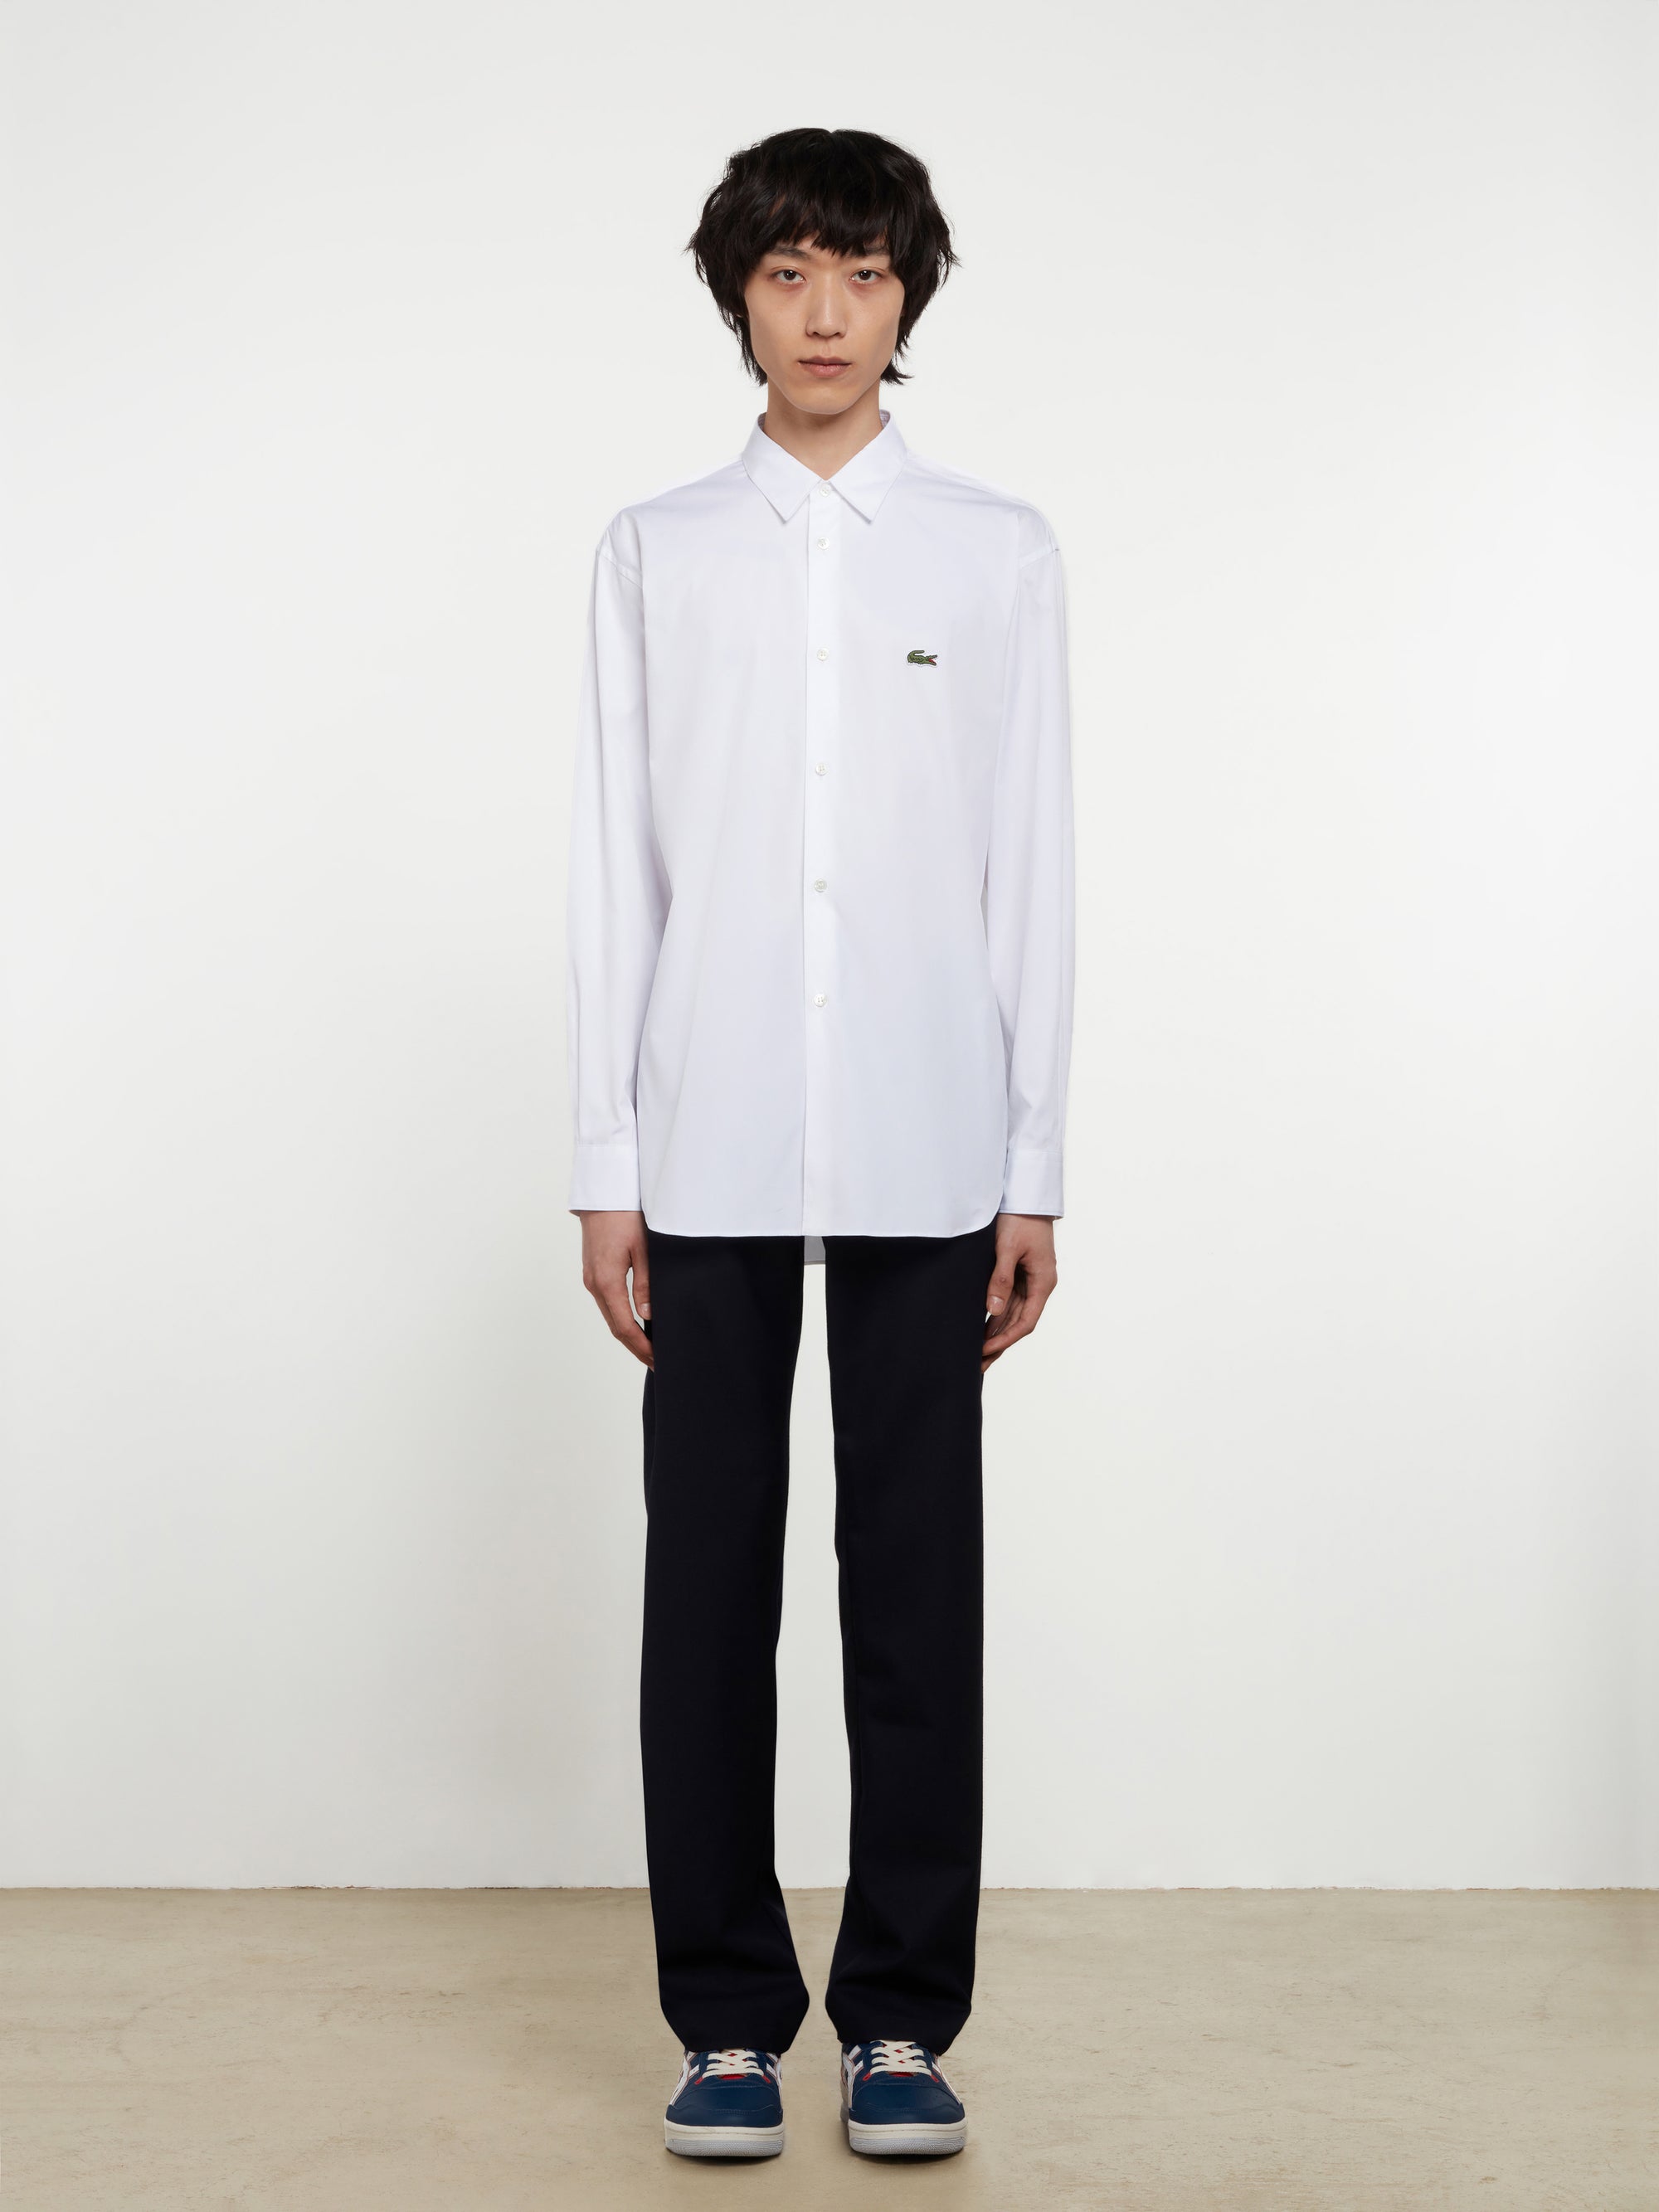 CDG Shirt - Lacoste Men’s Cotton Poplin Shirt - (White) view 4